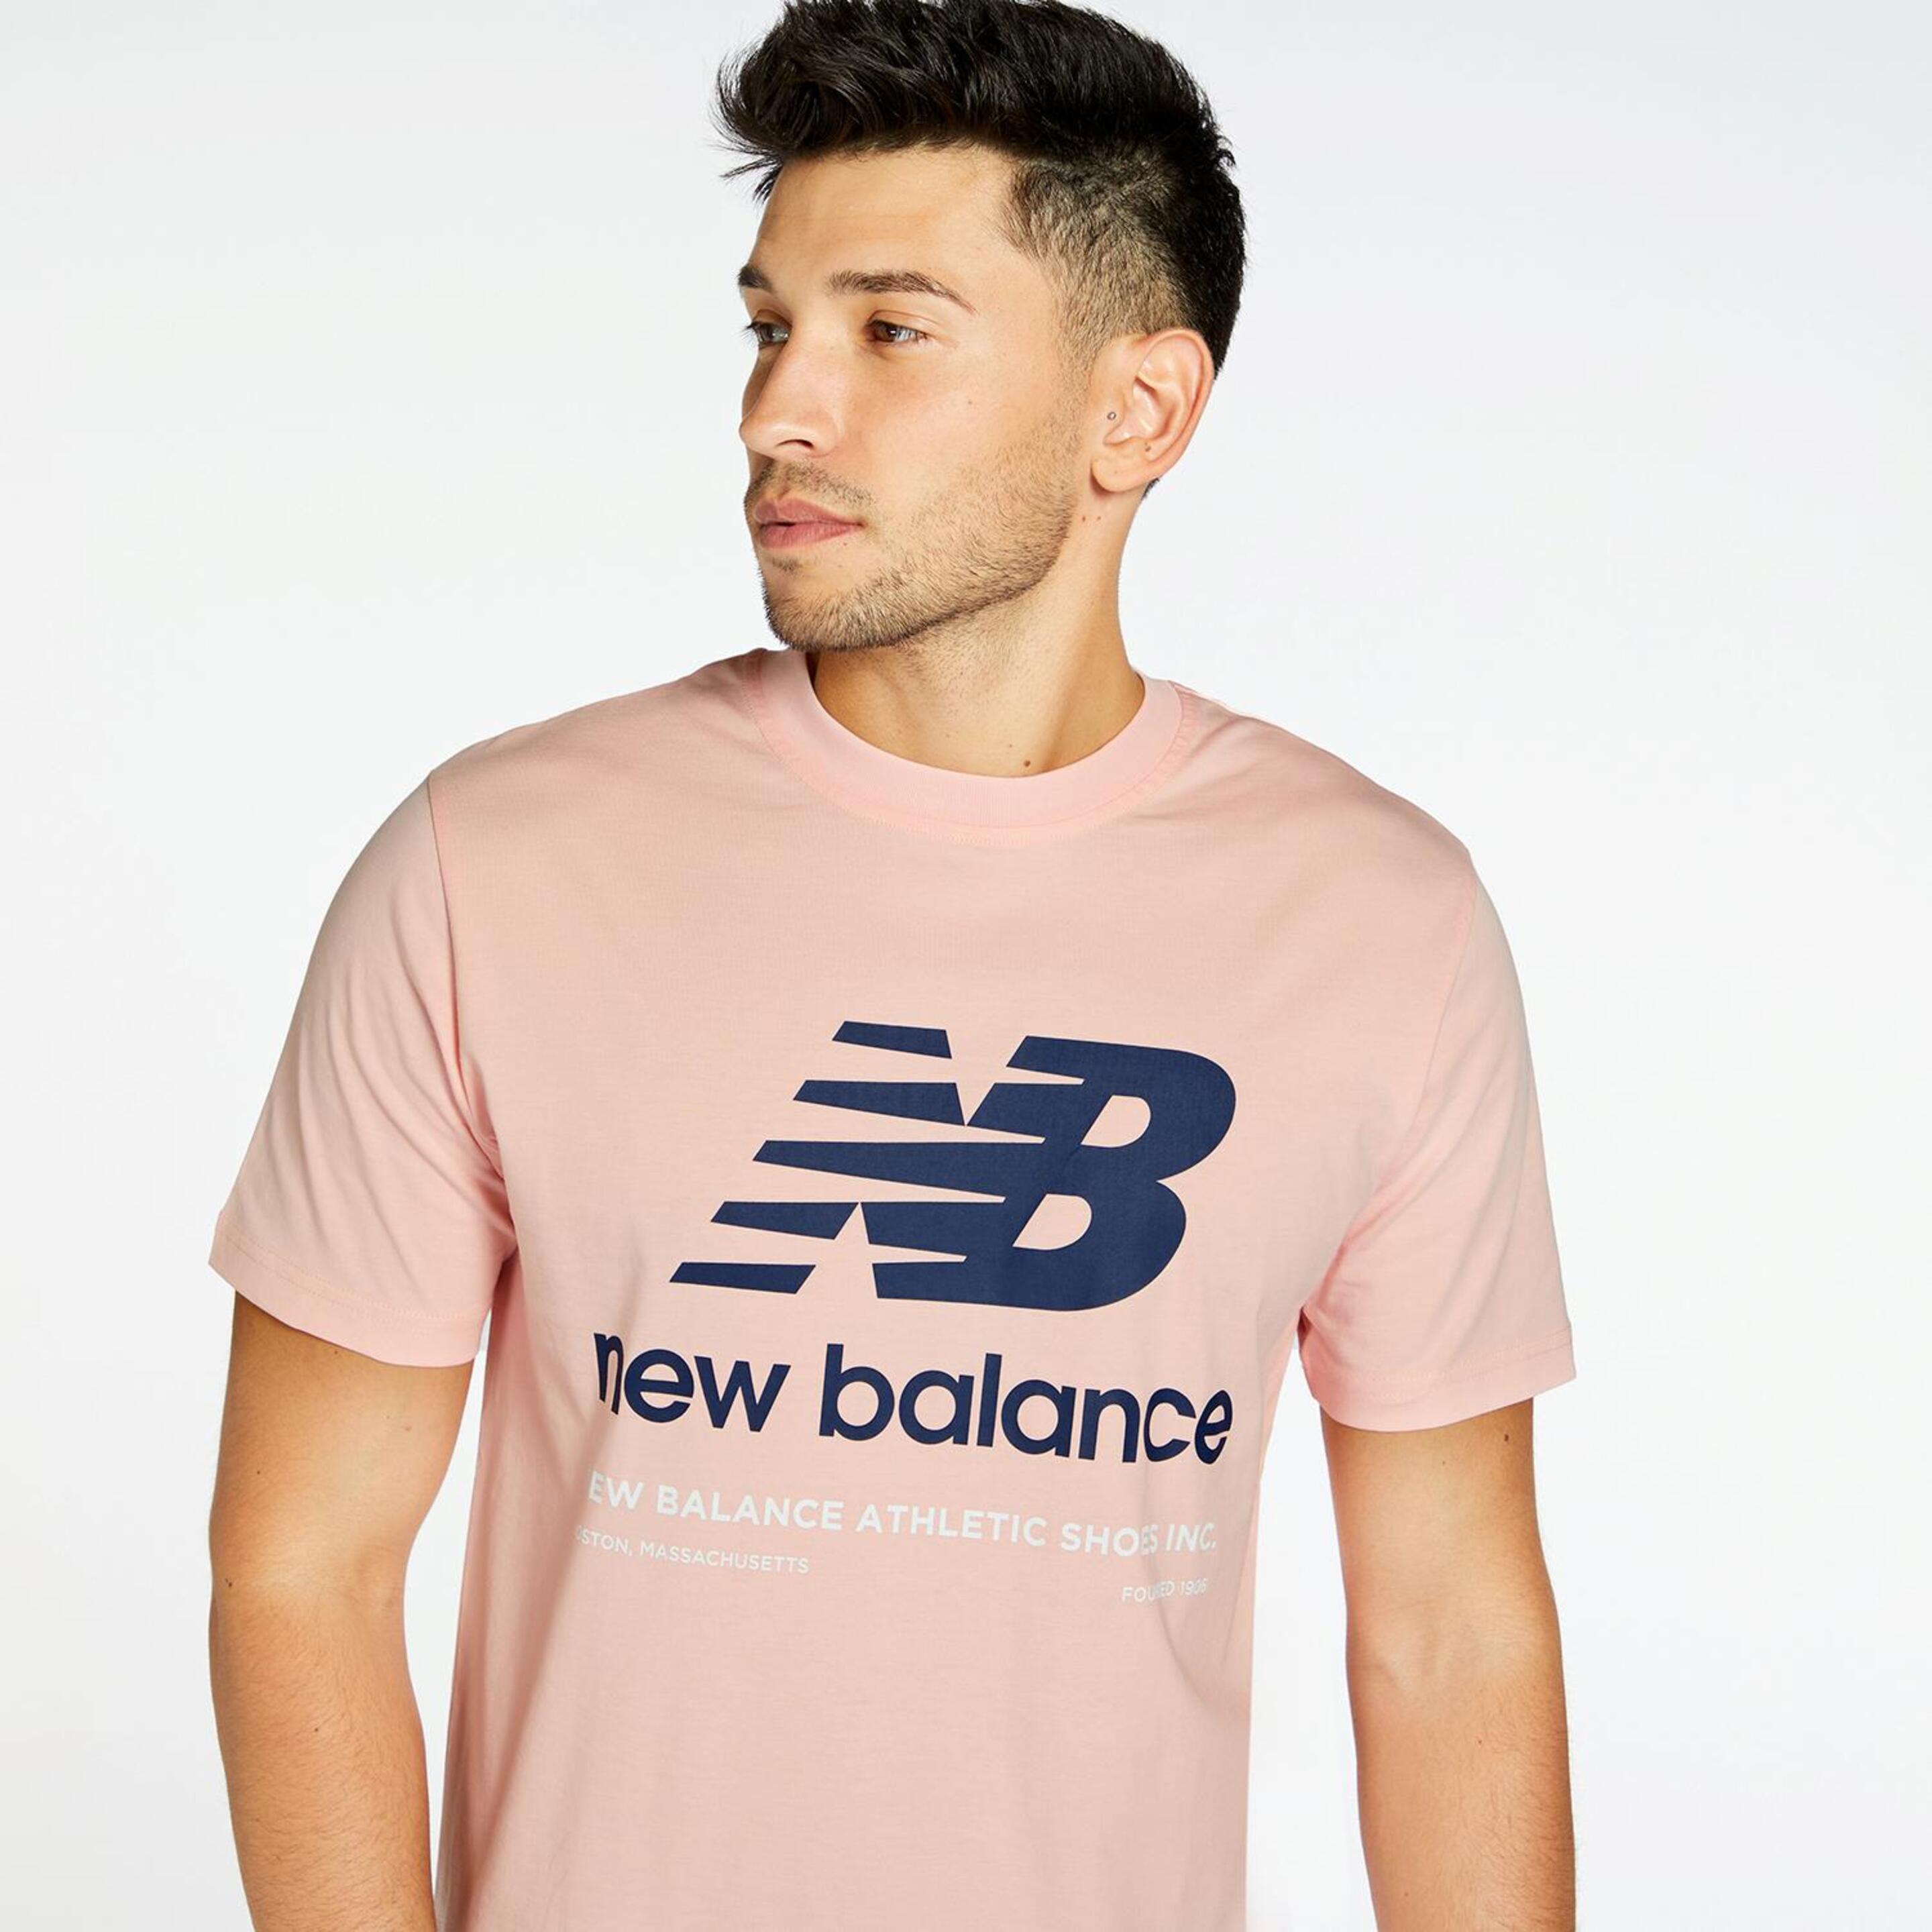 New Balance Athletic